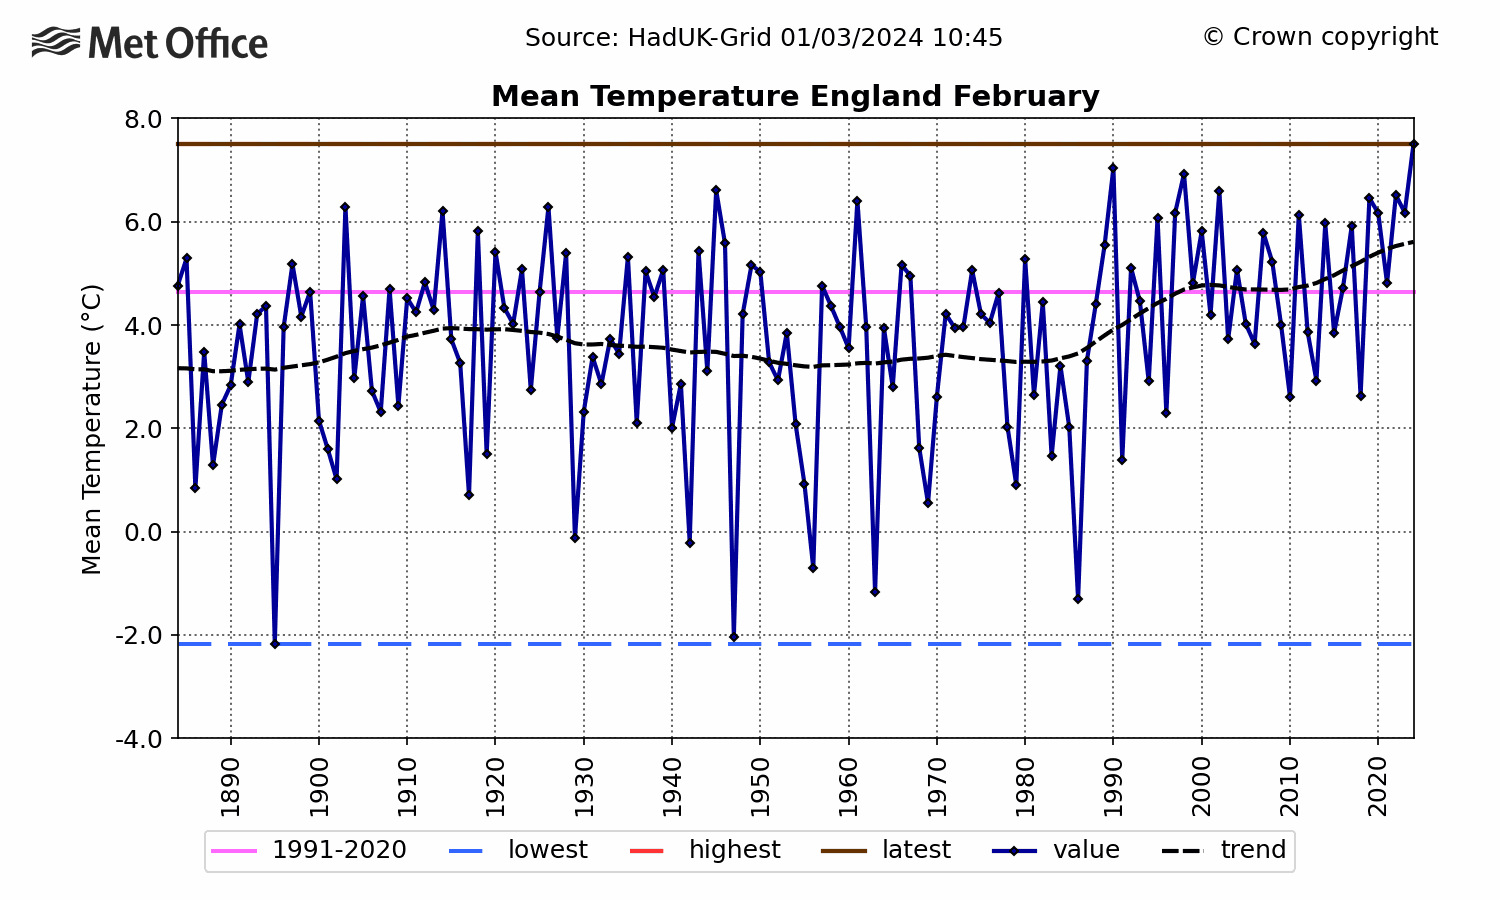 England Mean temperature - February